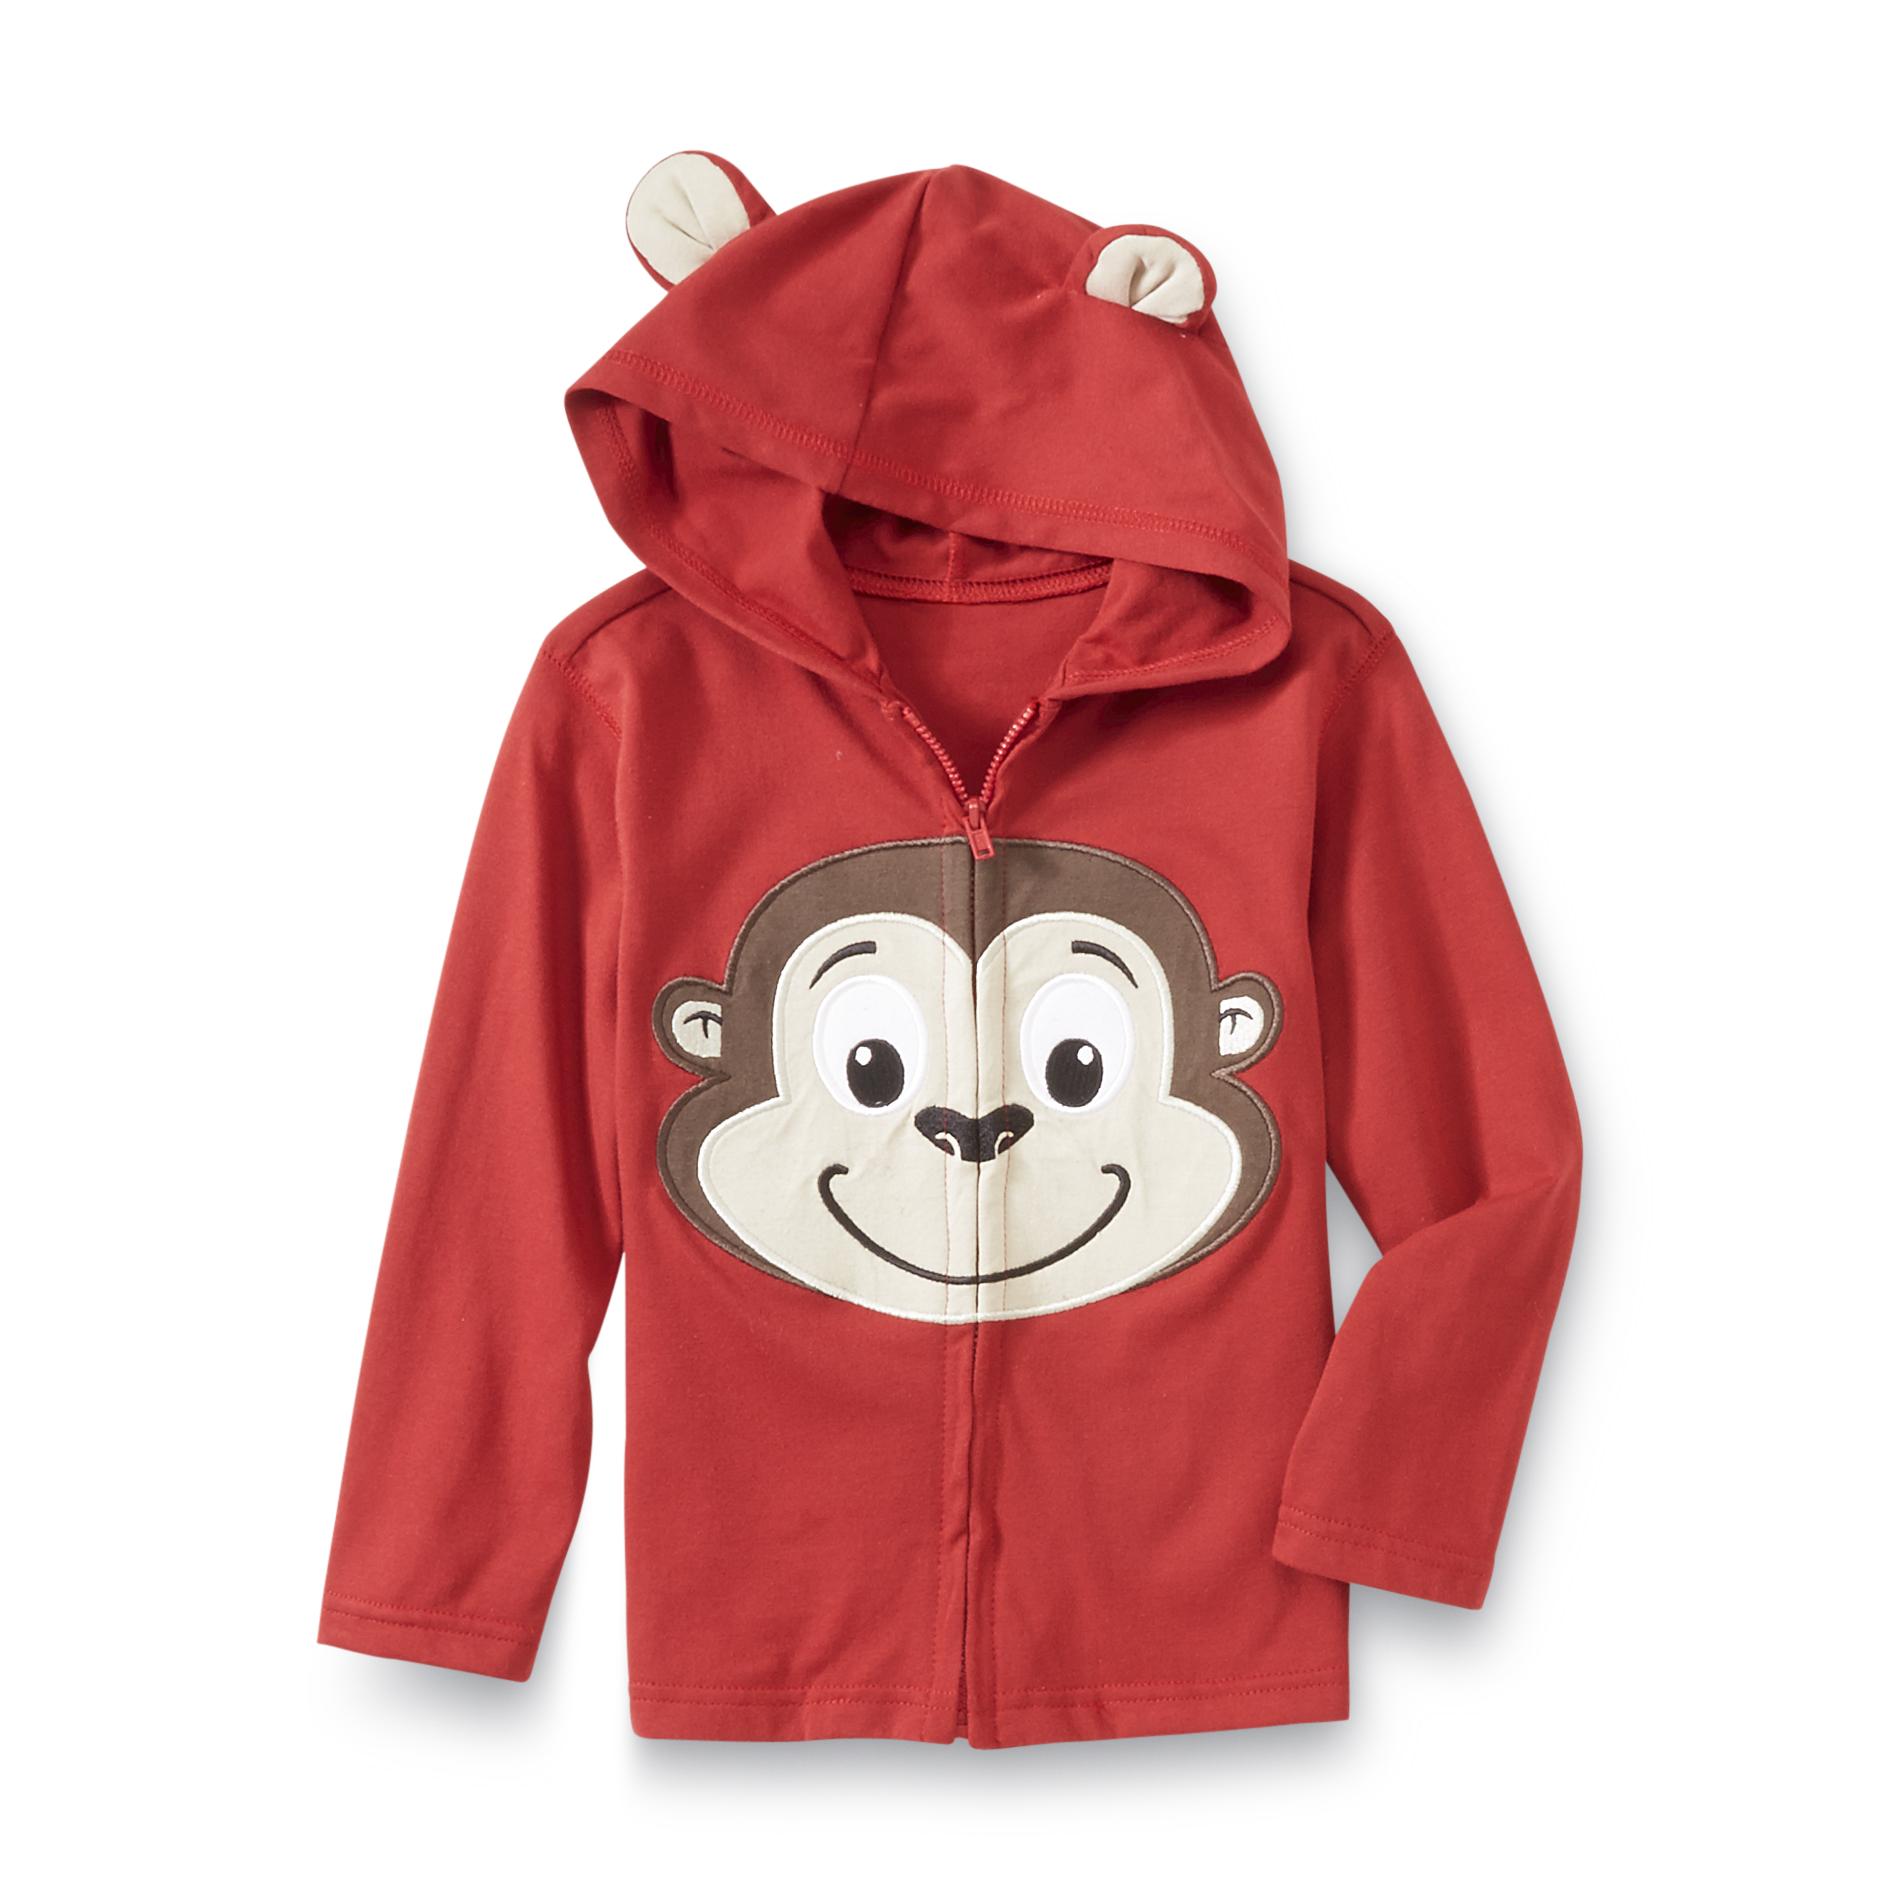 WonderKids Infant & Toddler Boy's Hoodie Jacket - Monkey